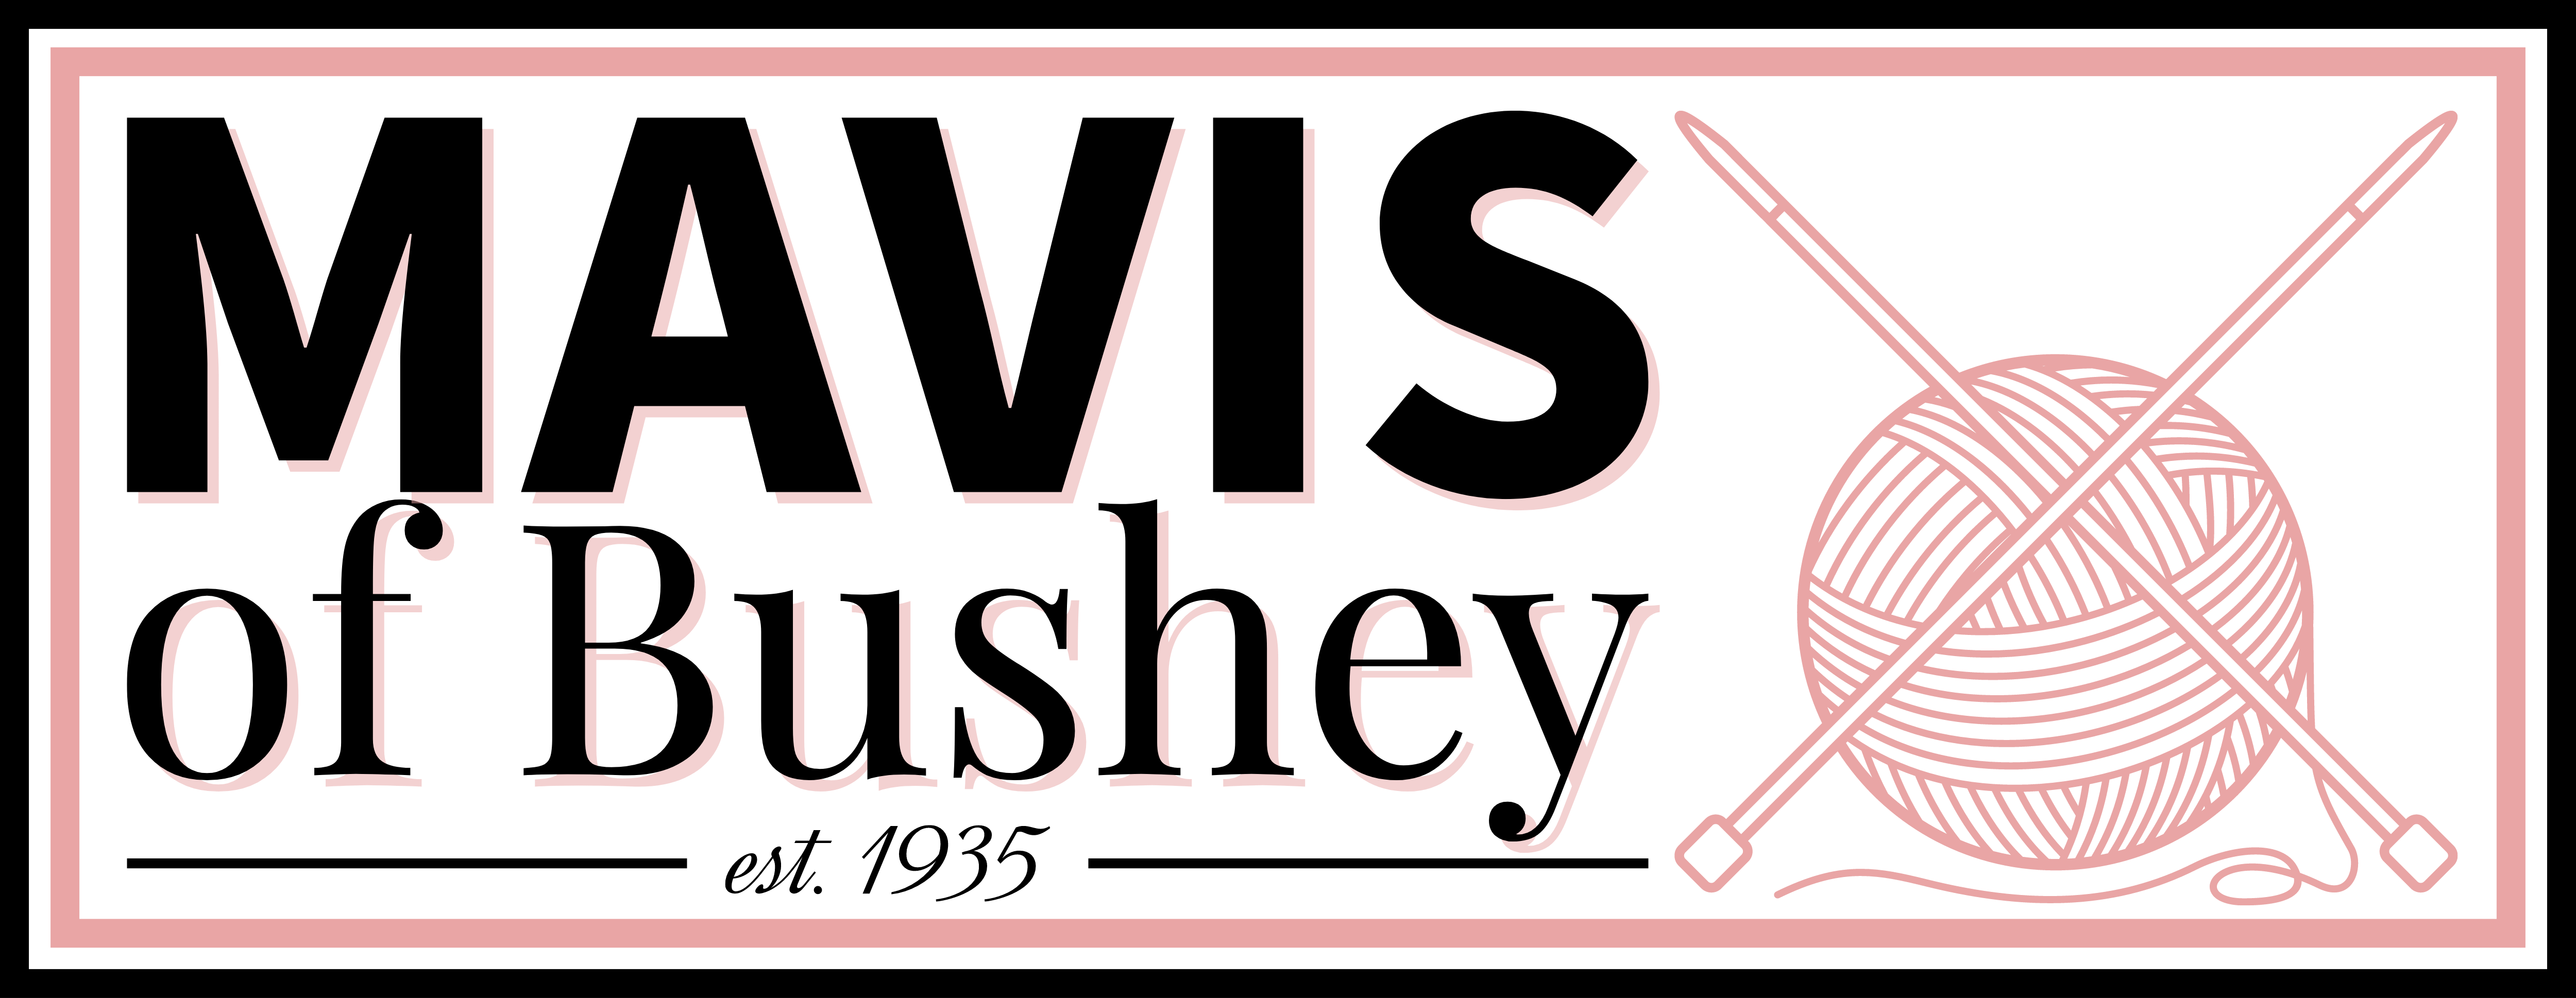 Mavis of Bushey